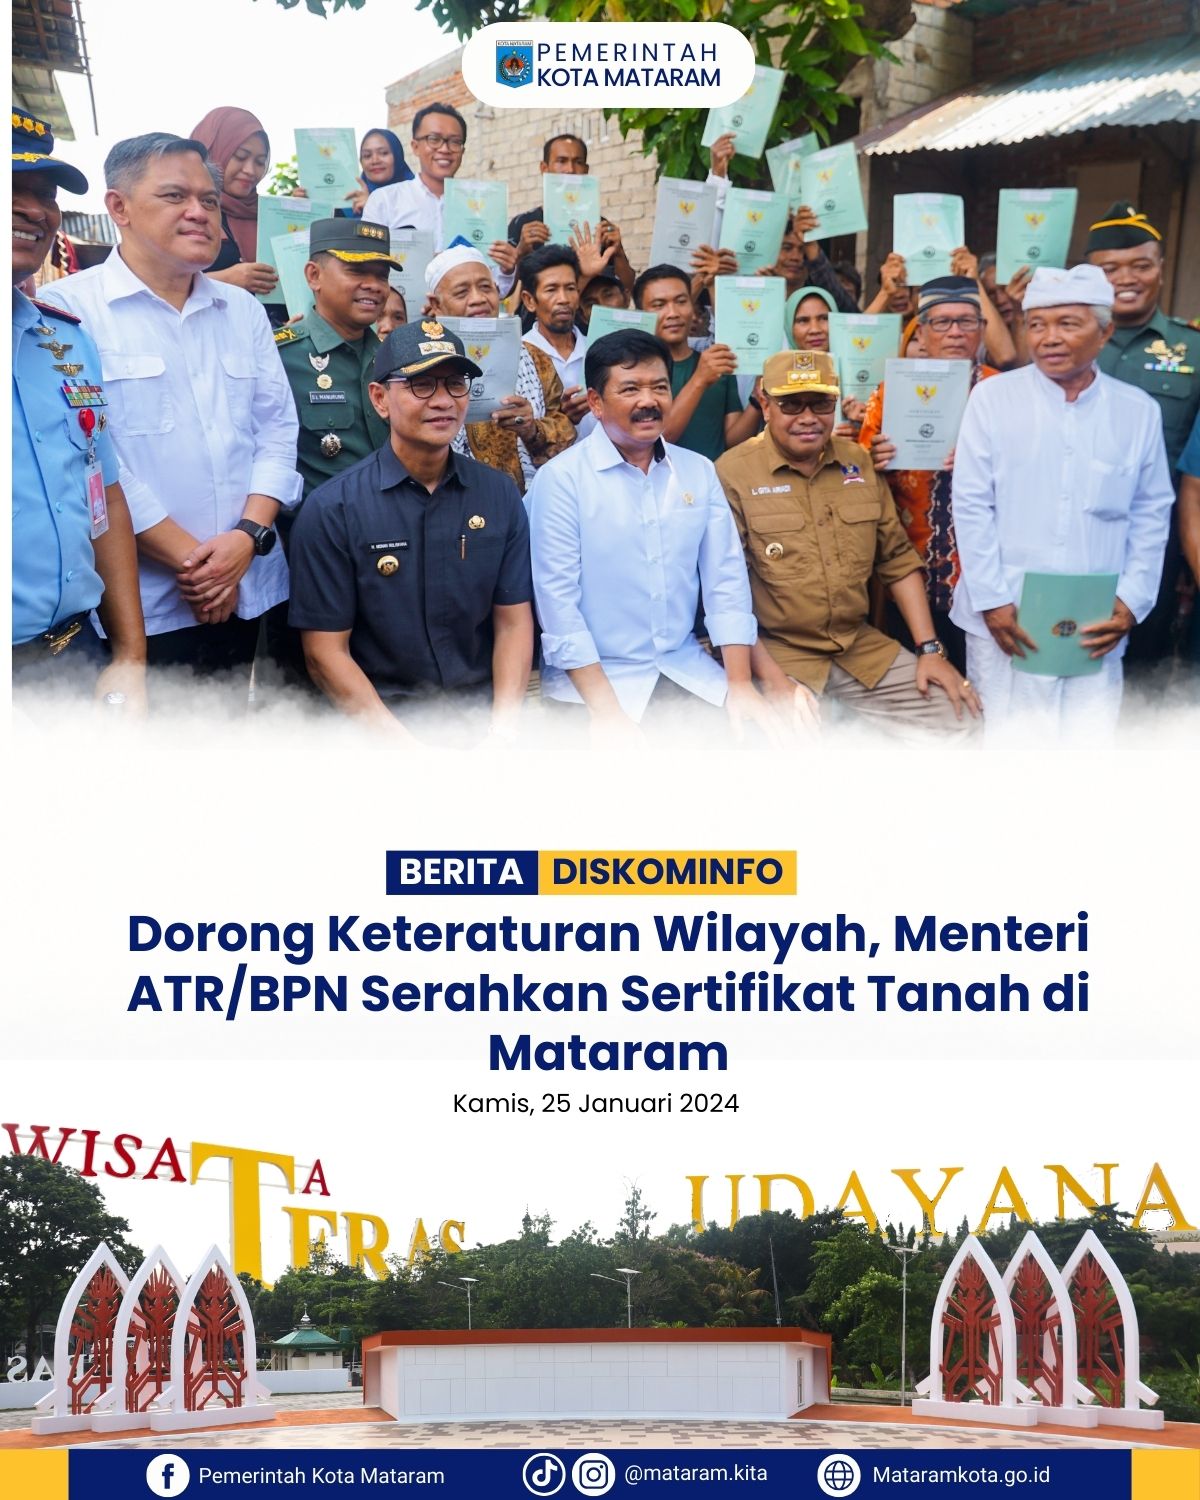 Dorong Keteraturan Wilayah: Menteri ATR/BPN Serahkan Sertifikat Tanah di Mataram